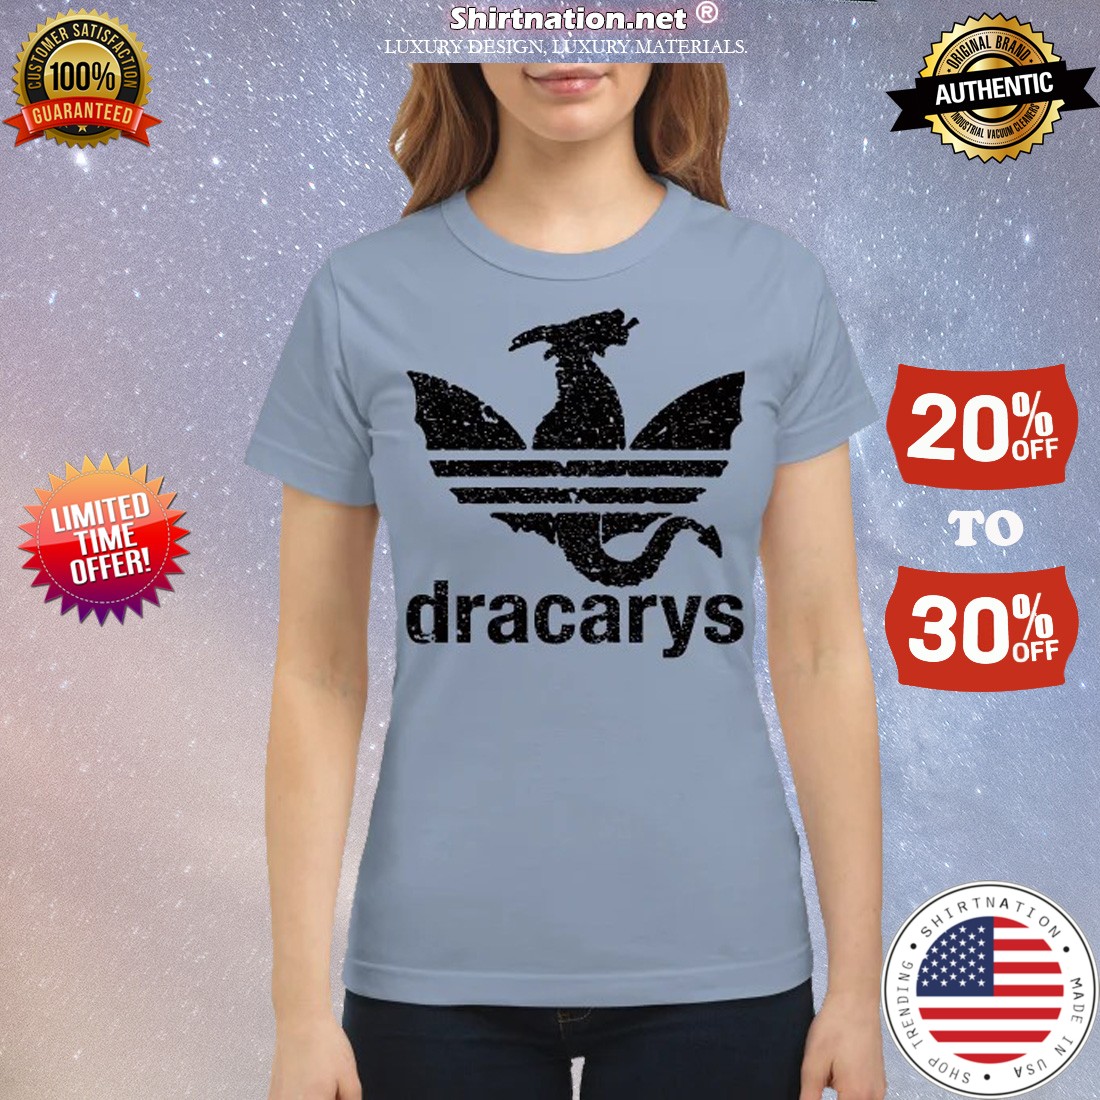 Adidas Dracarys shirt